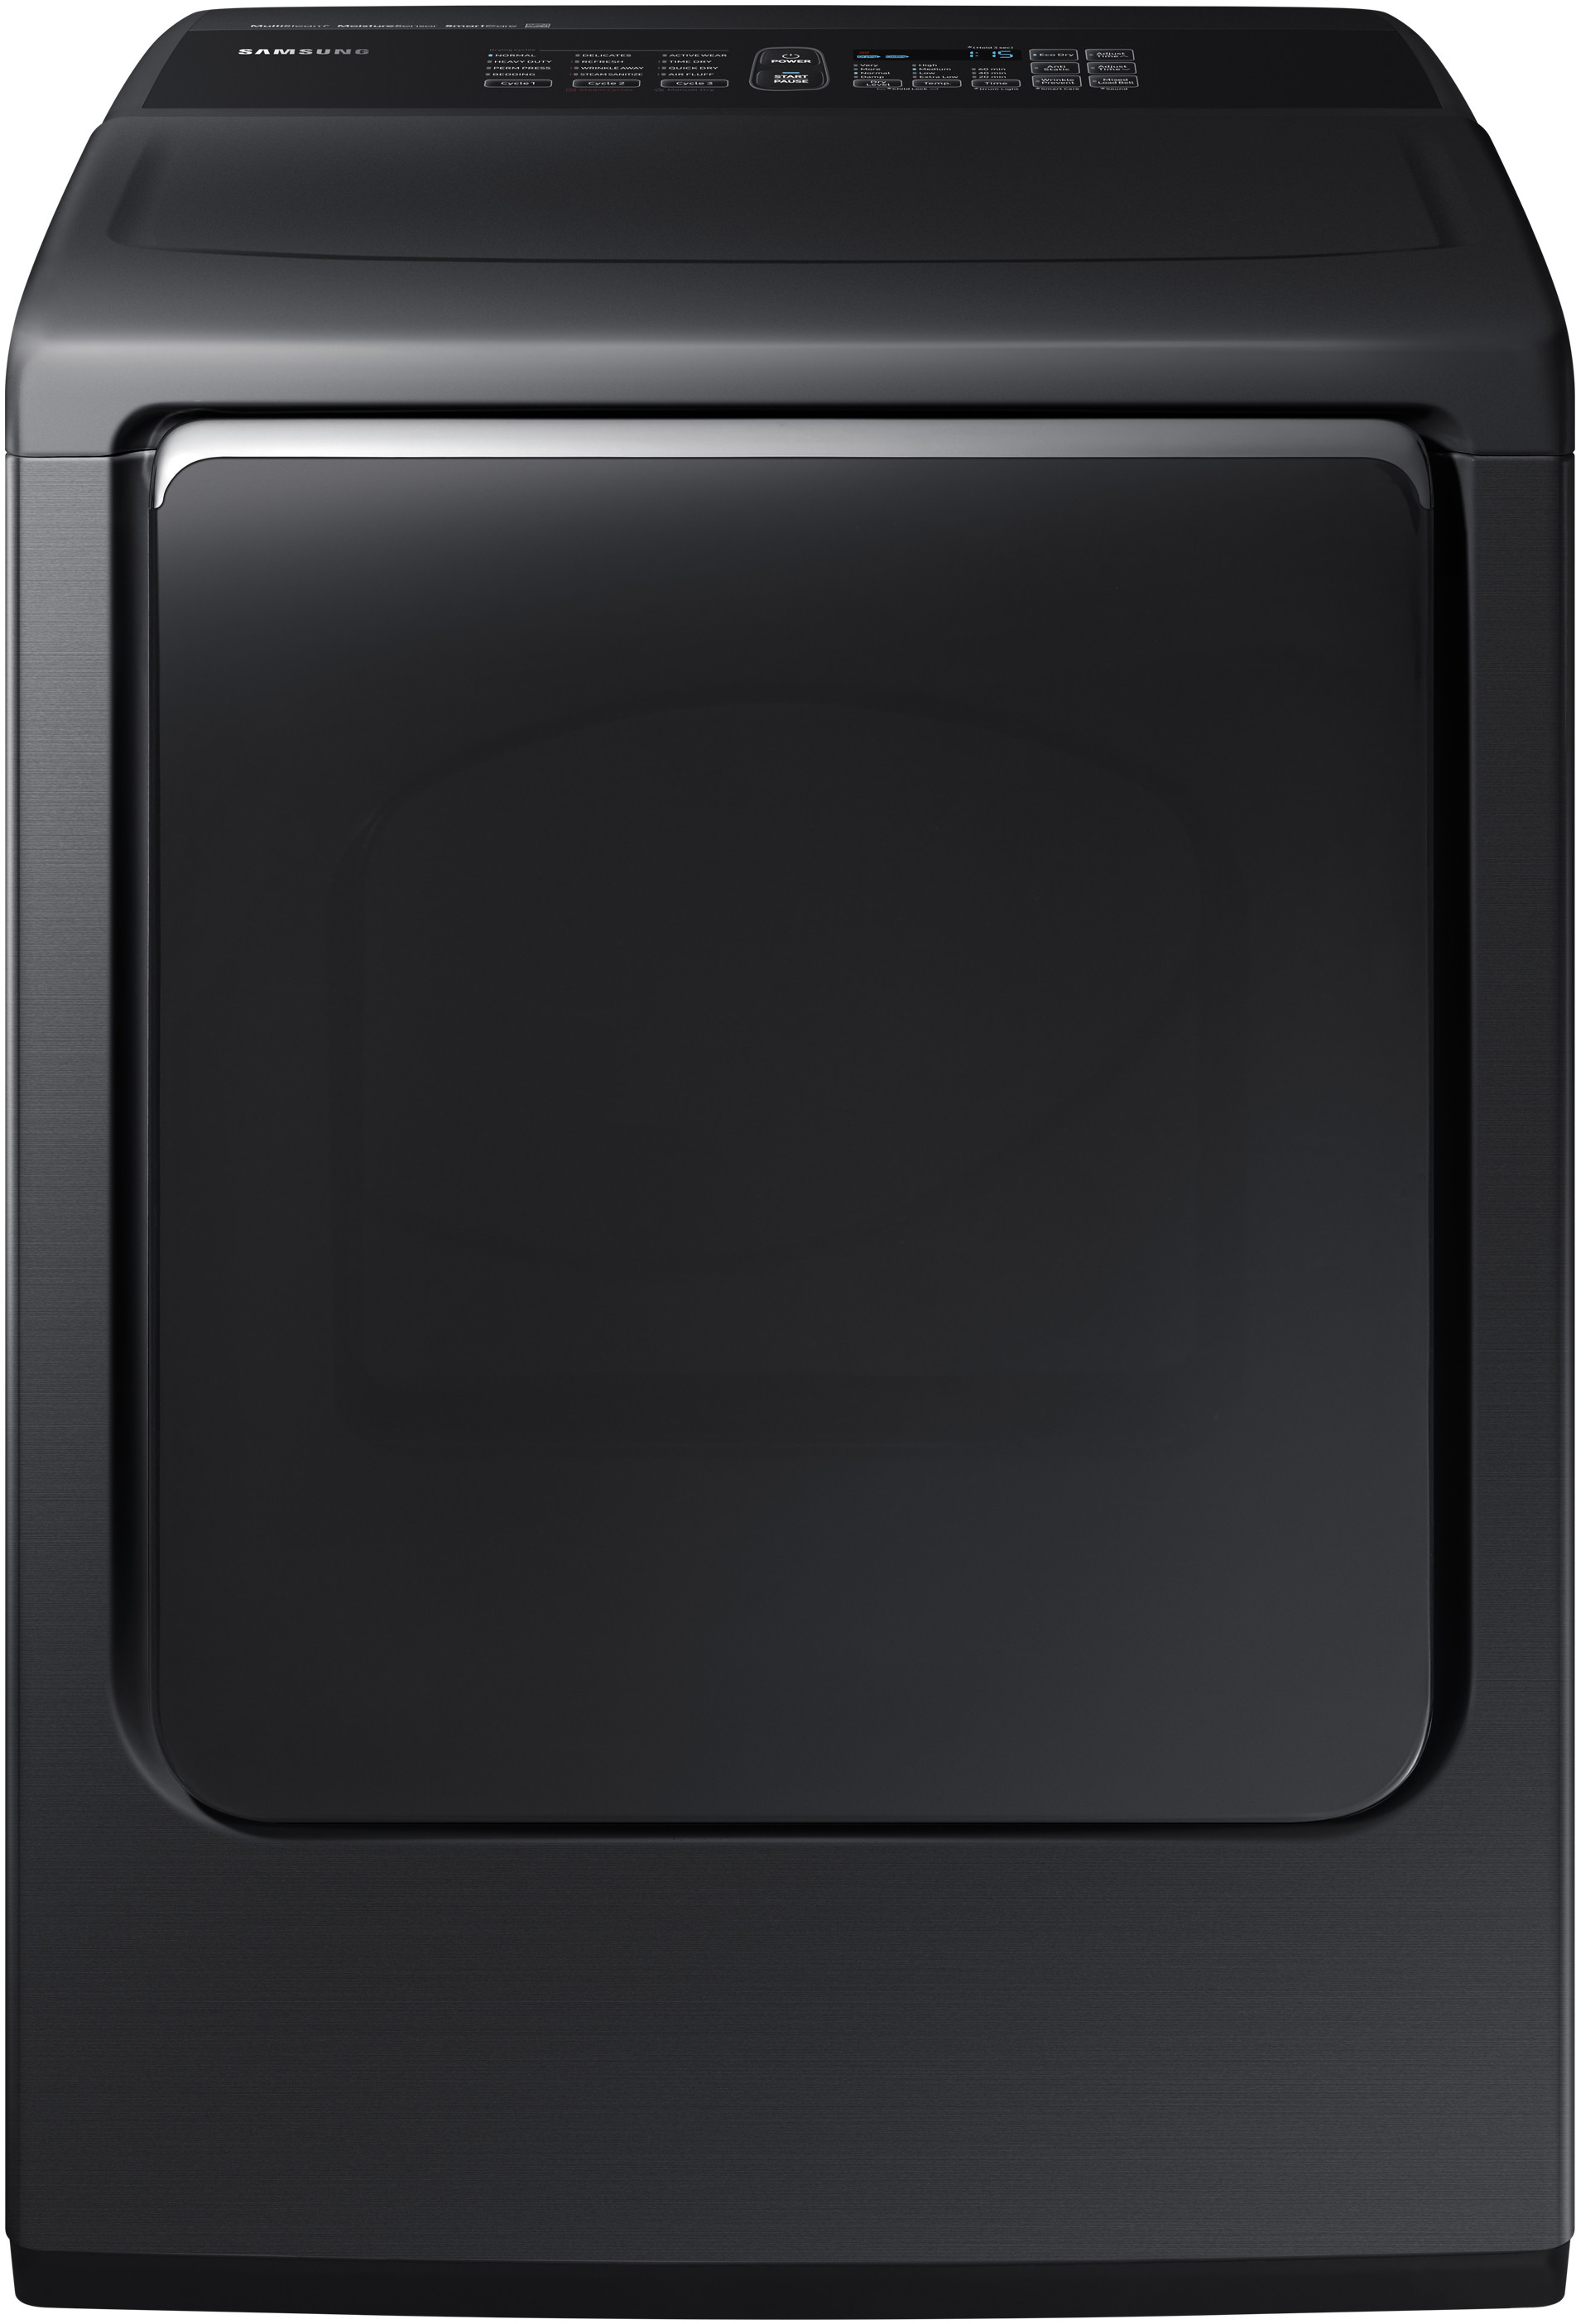 Samsung DVE52M8650V 27 Inch Electric Dryer with Multi-Steam™, Sensor